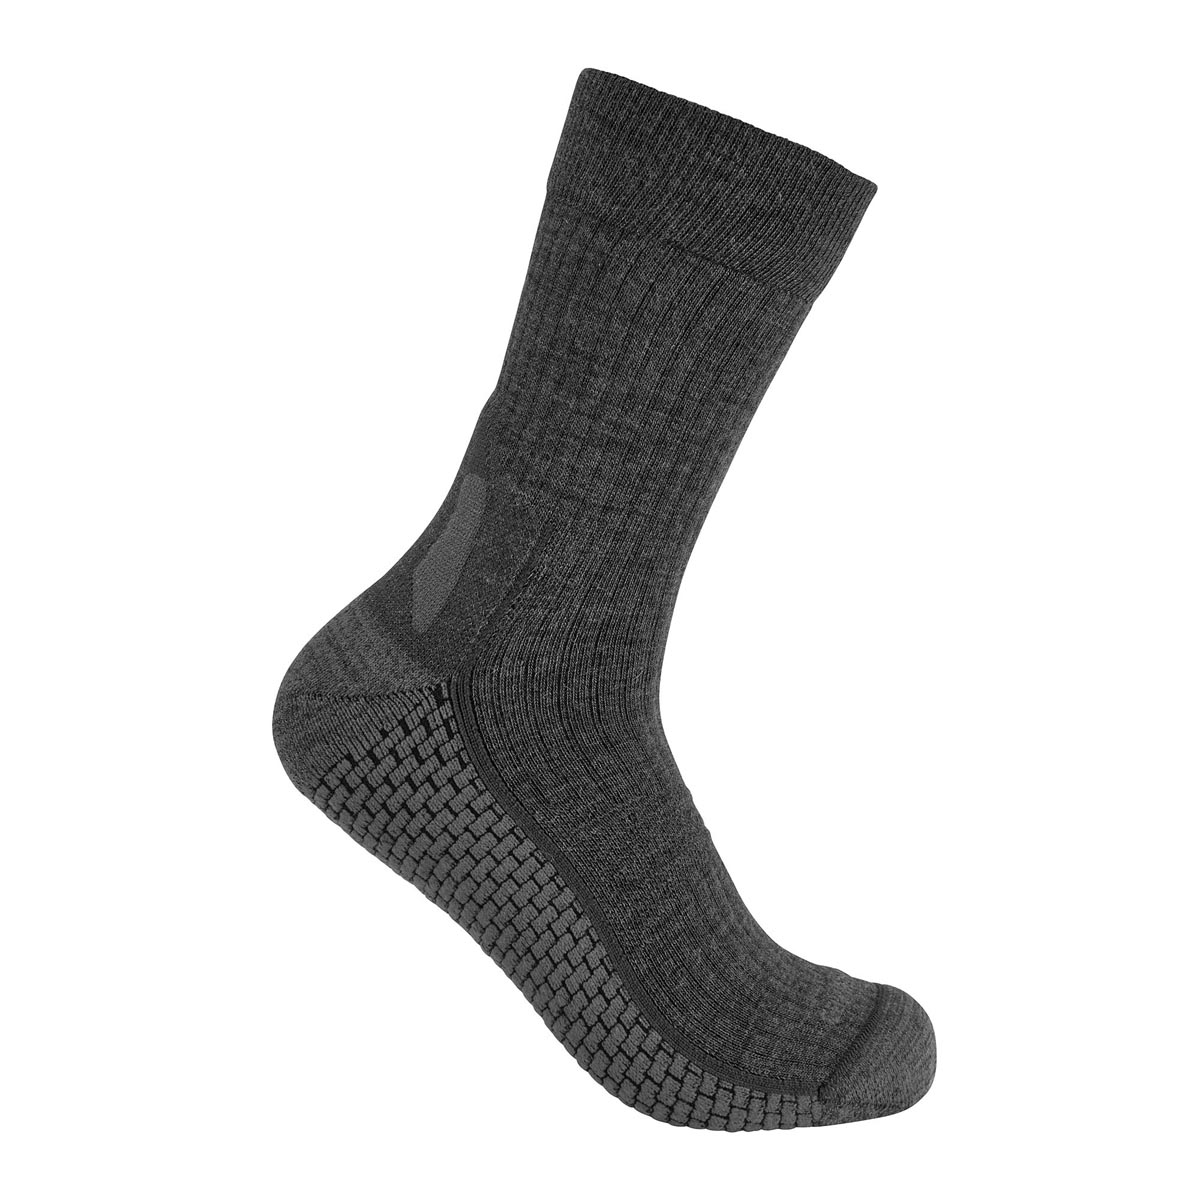 Carhartt Men's Force Grid Midweight Synthetic Merino Wool Blend Short Crew Sock